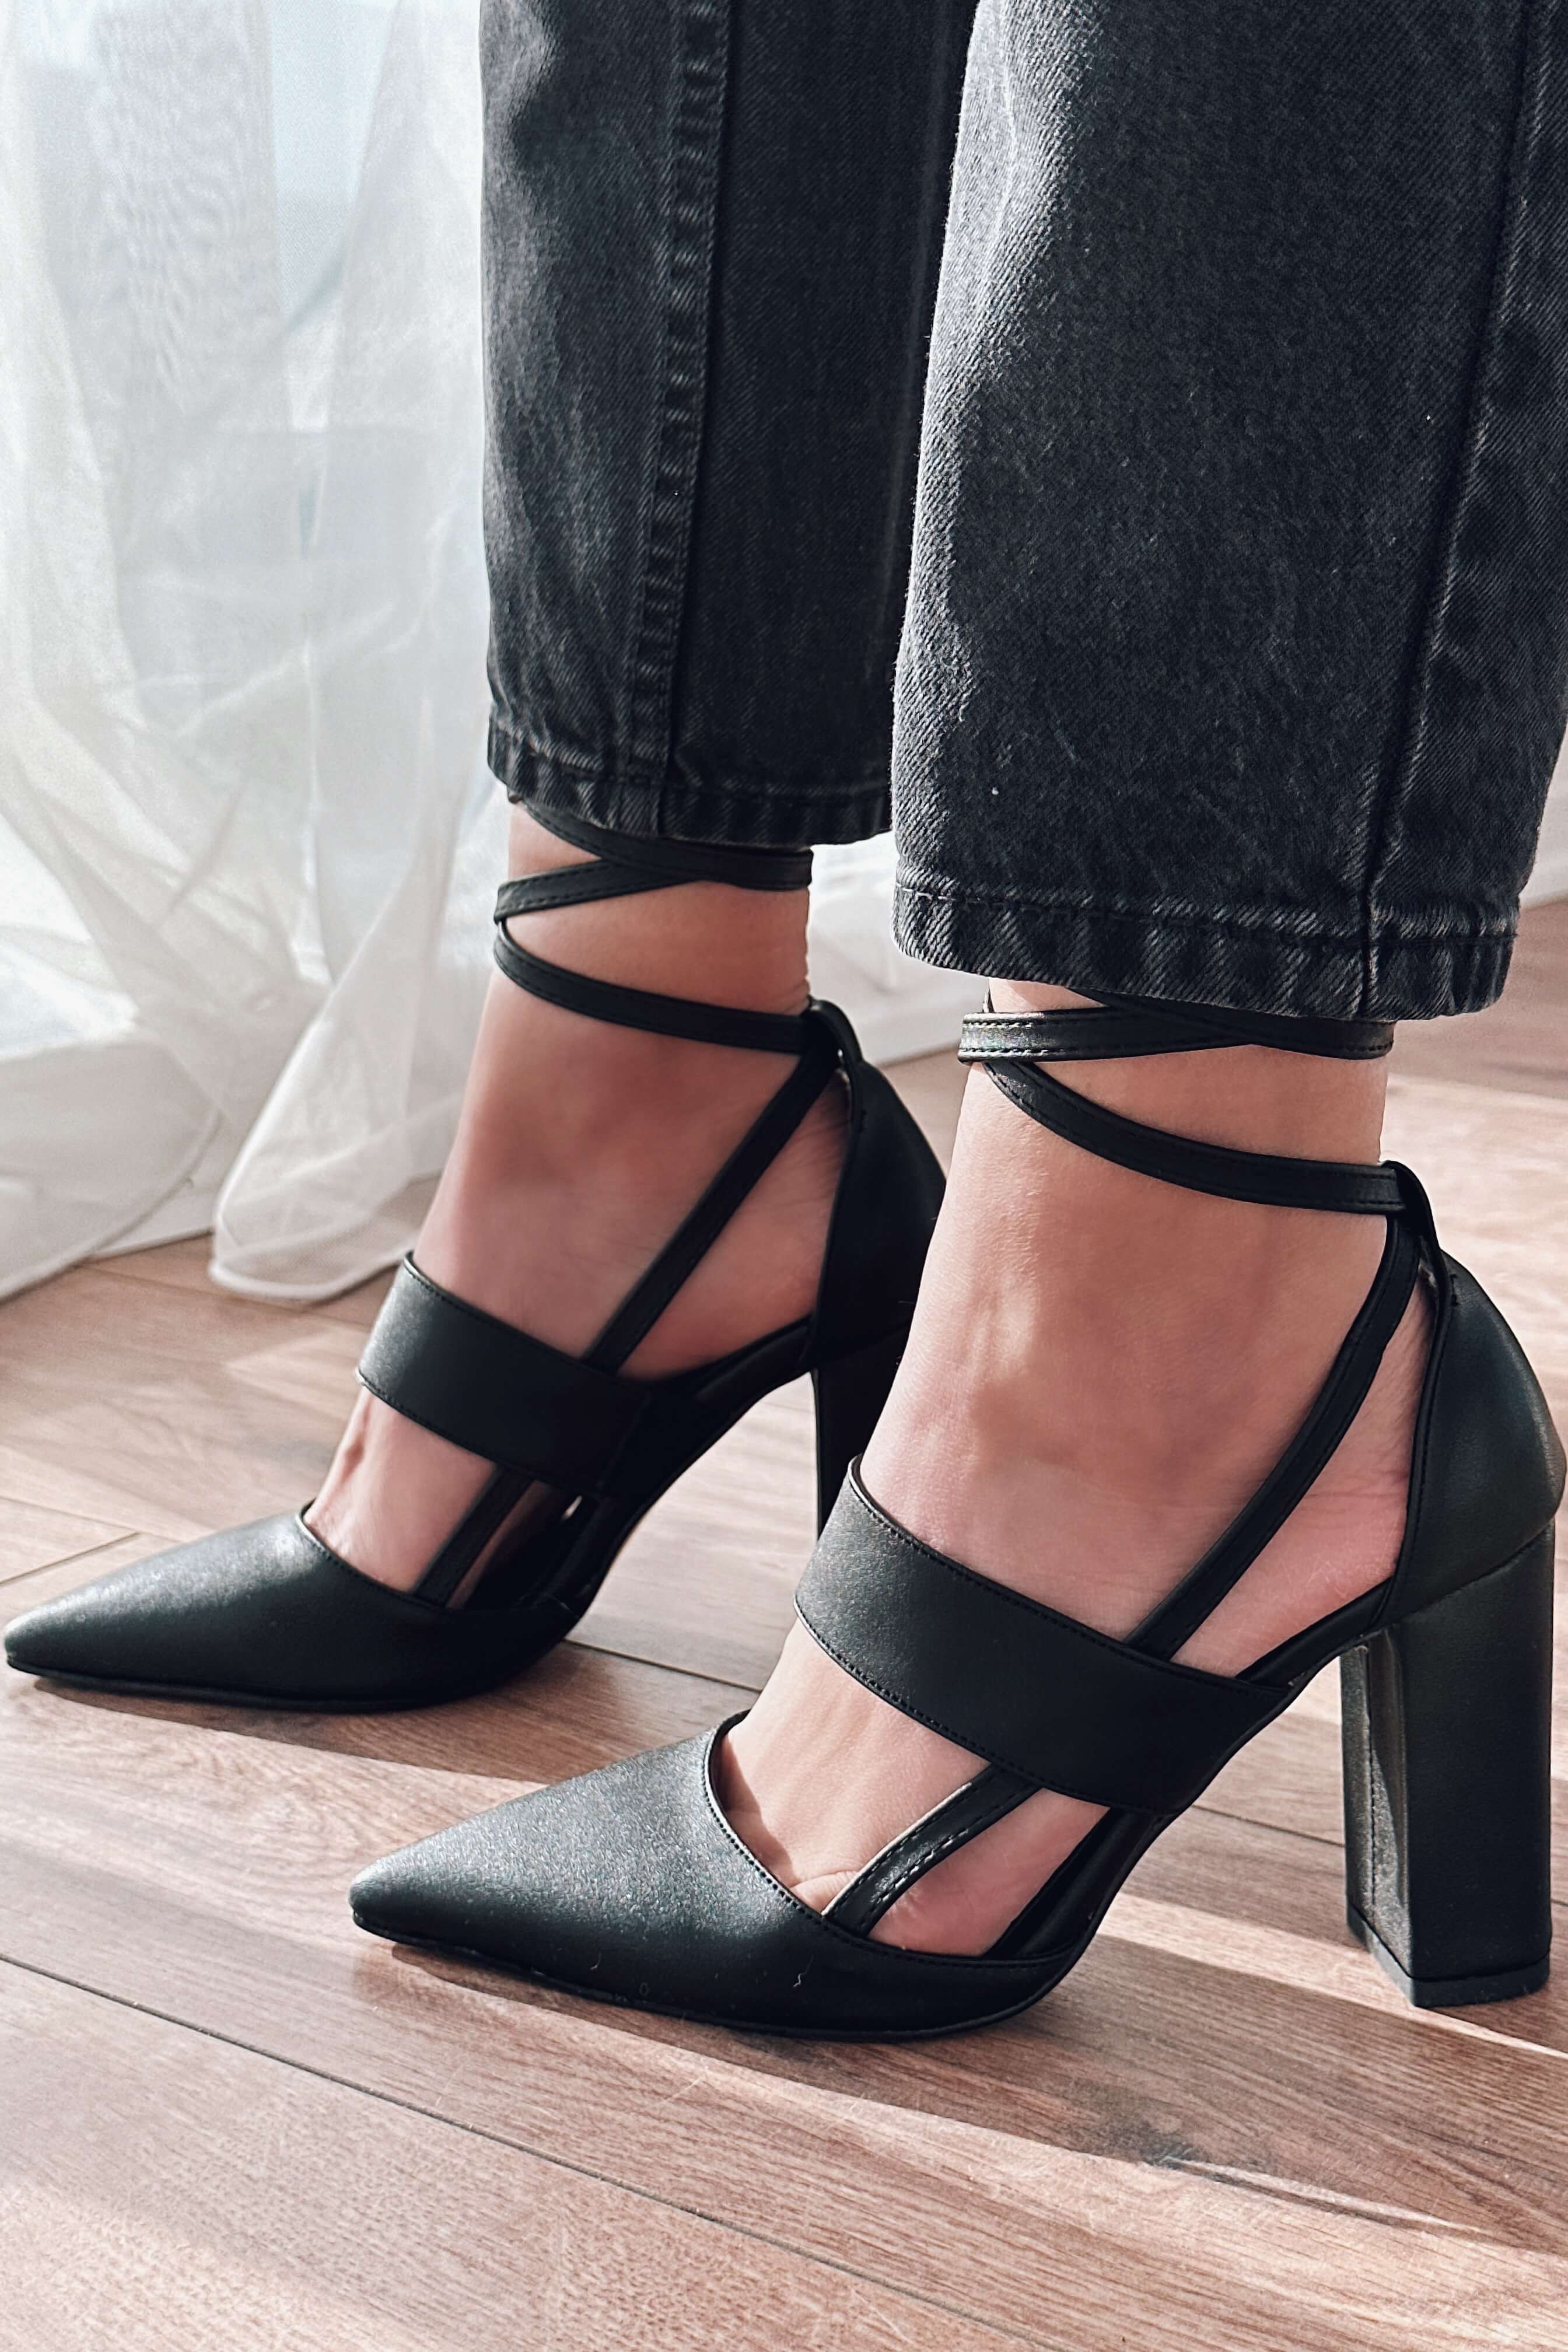 Lucia matte leather high heels woman stiletto black